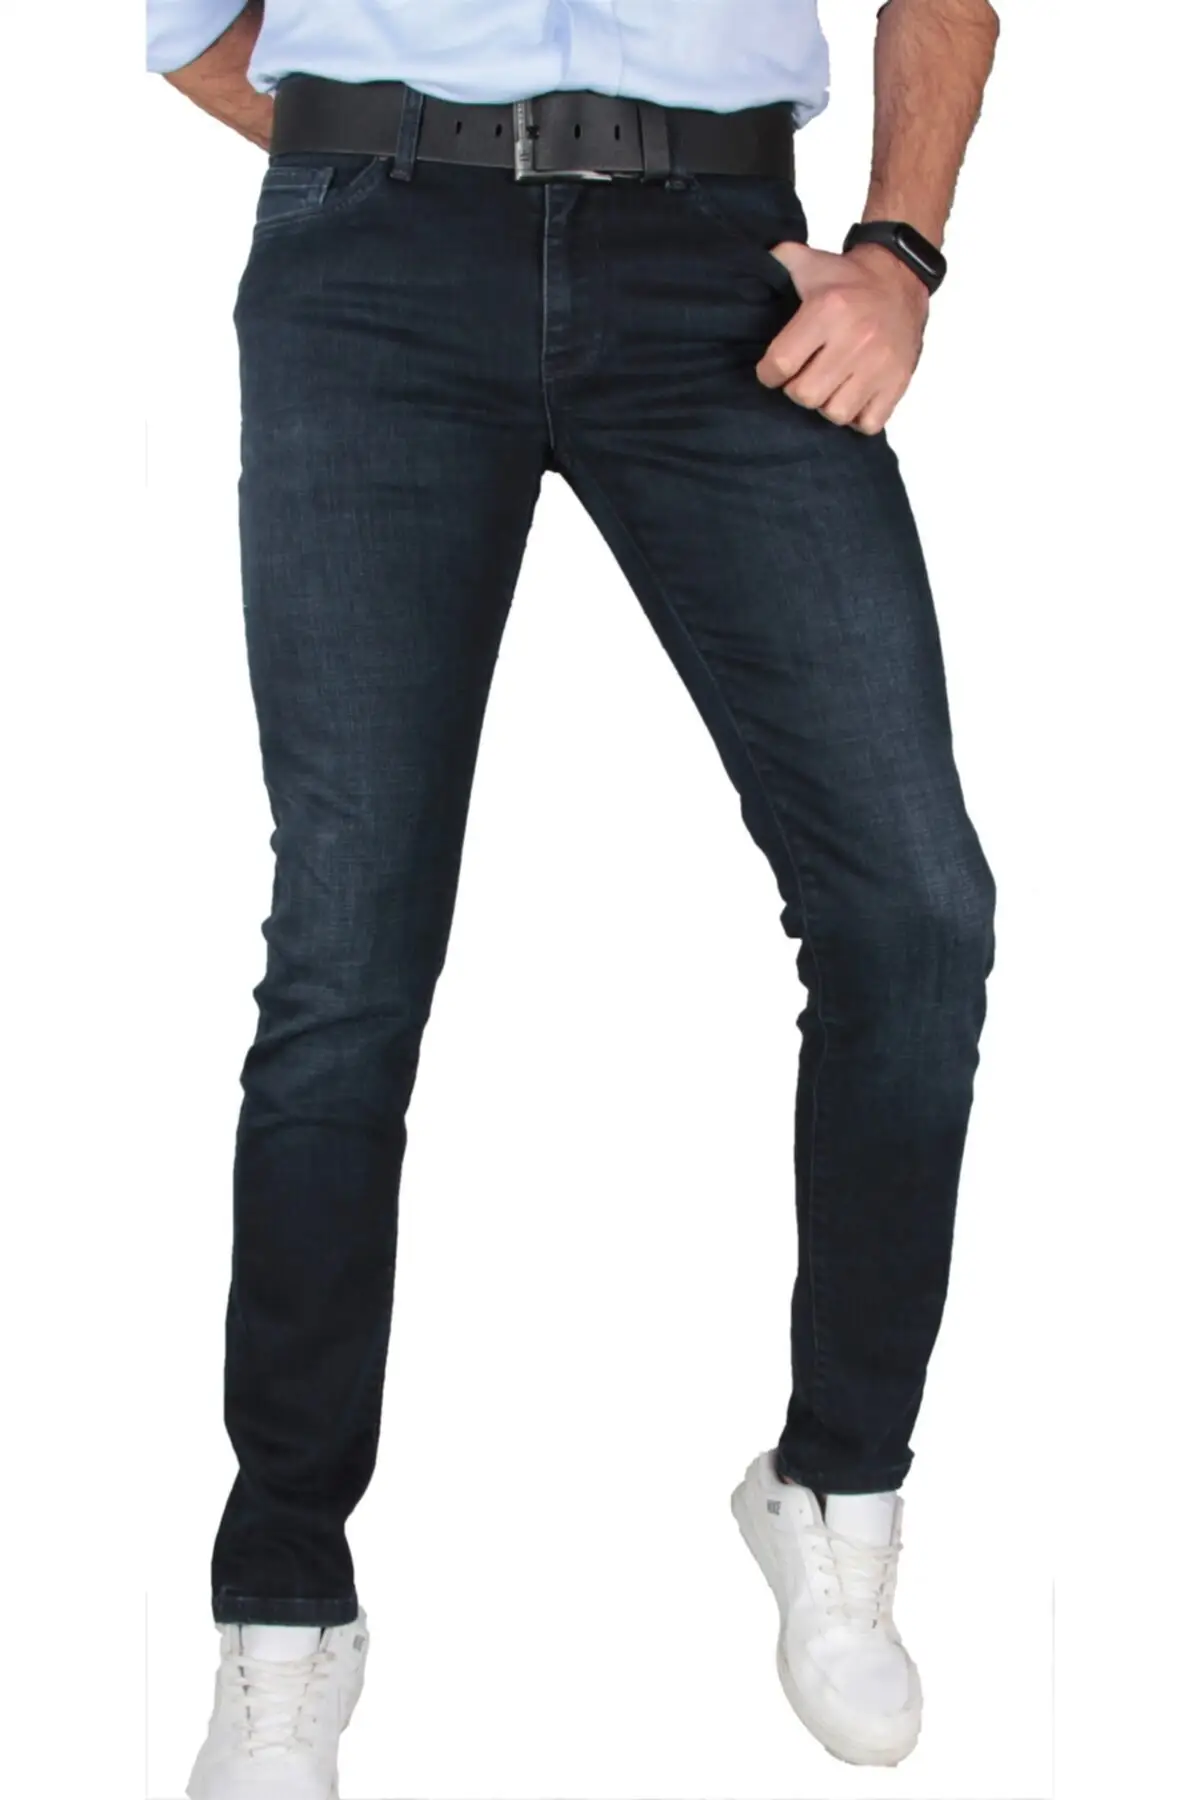 Male to Male Liquid Dark Navy Blue Jeans Men's Jeans 2022 Fashion